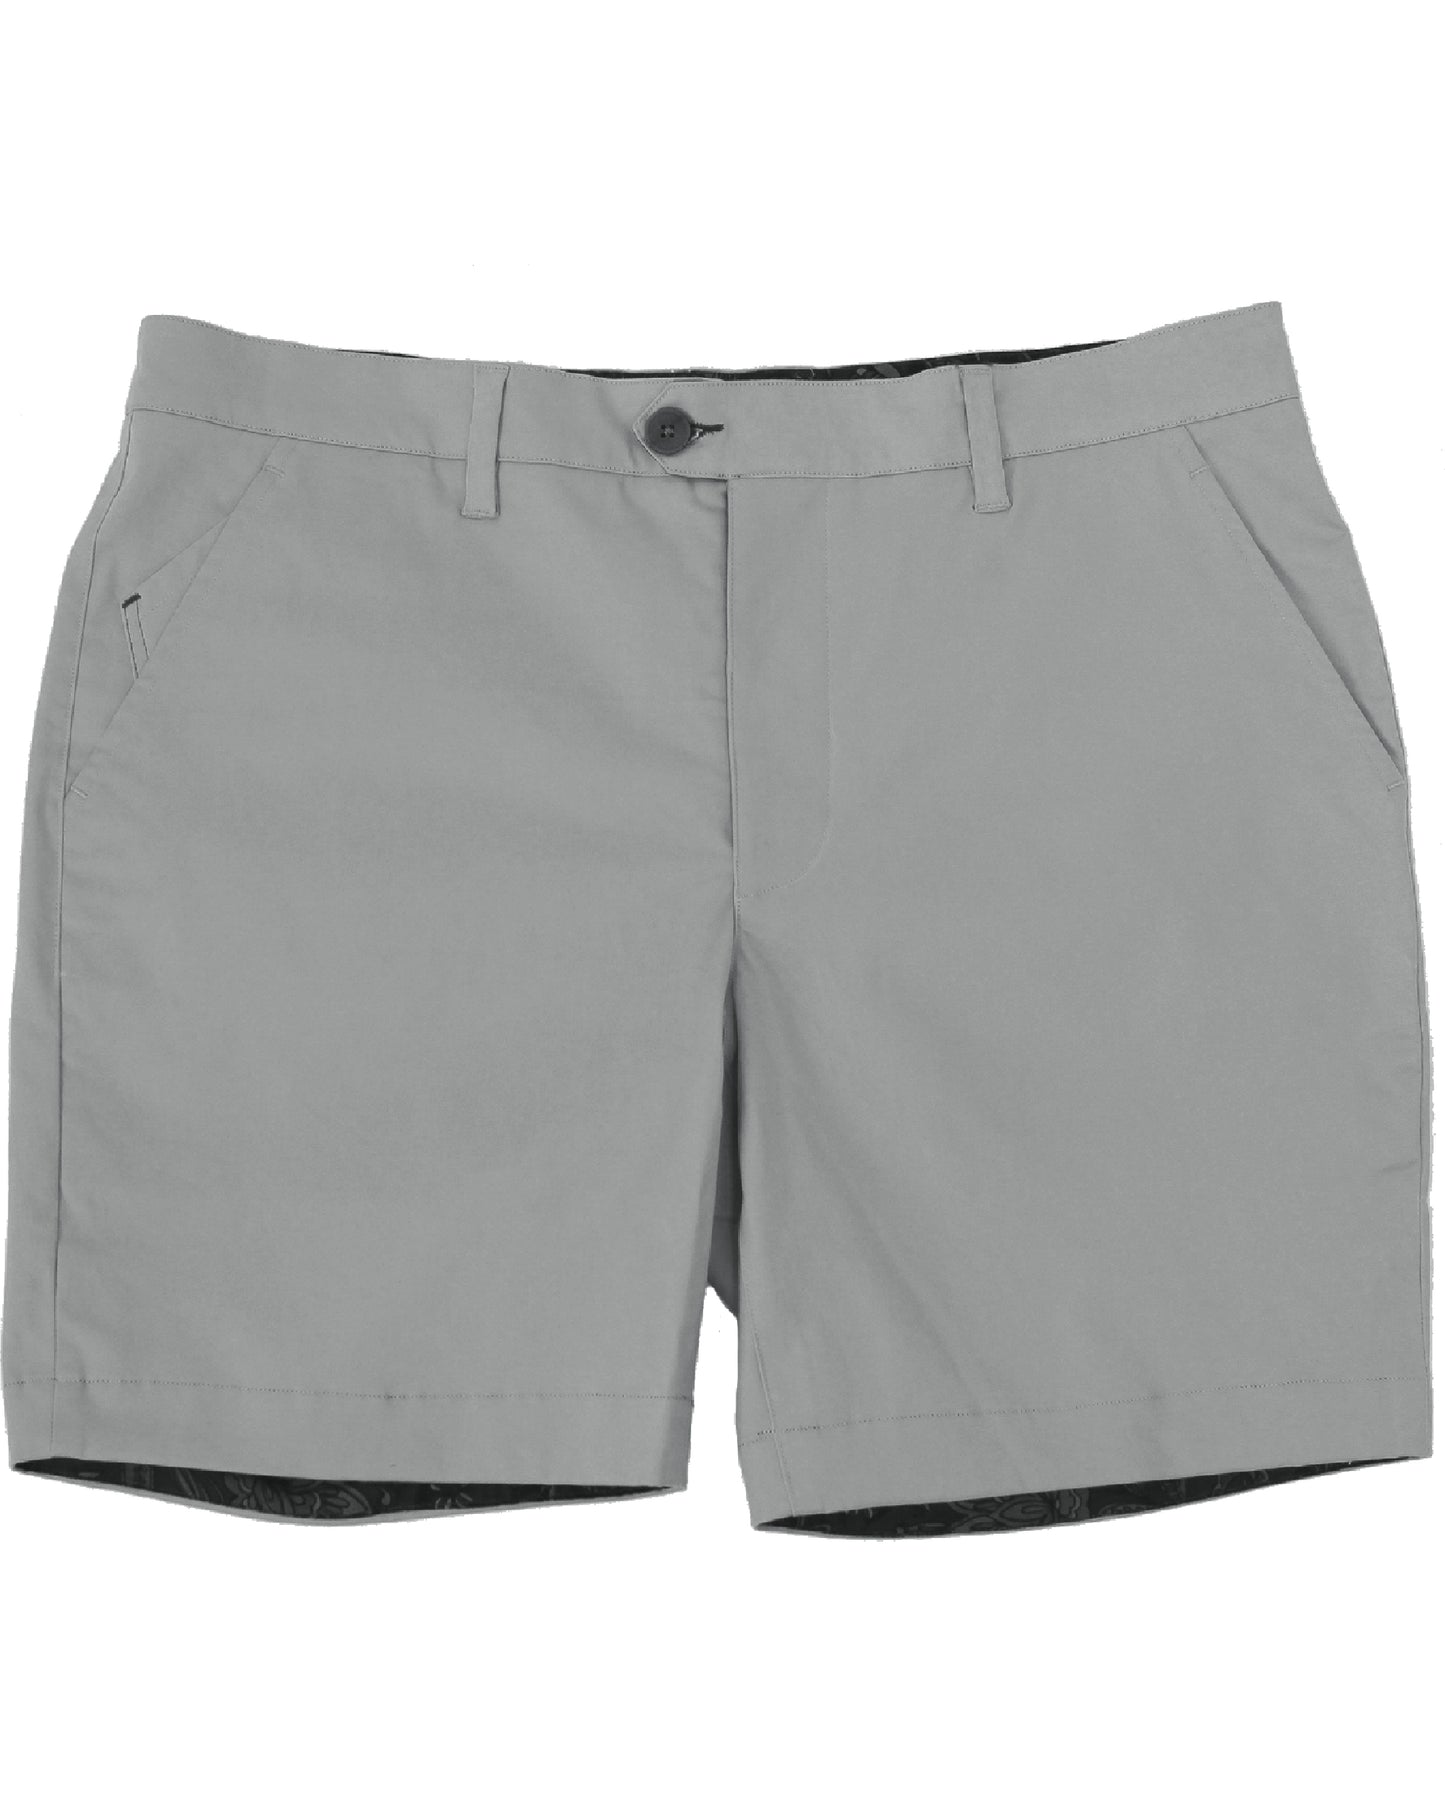 John Lux Grey Shorts